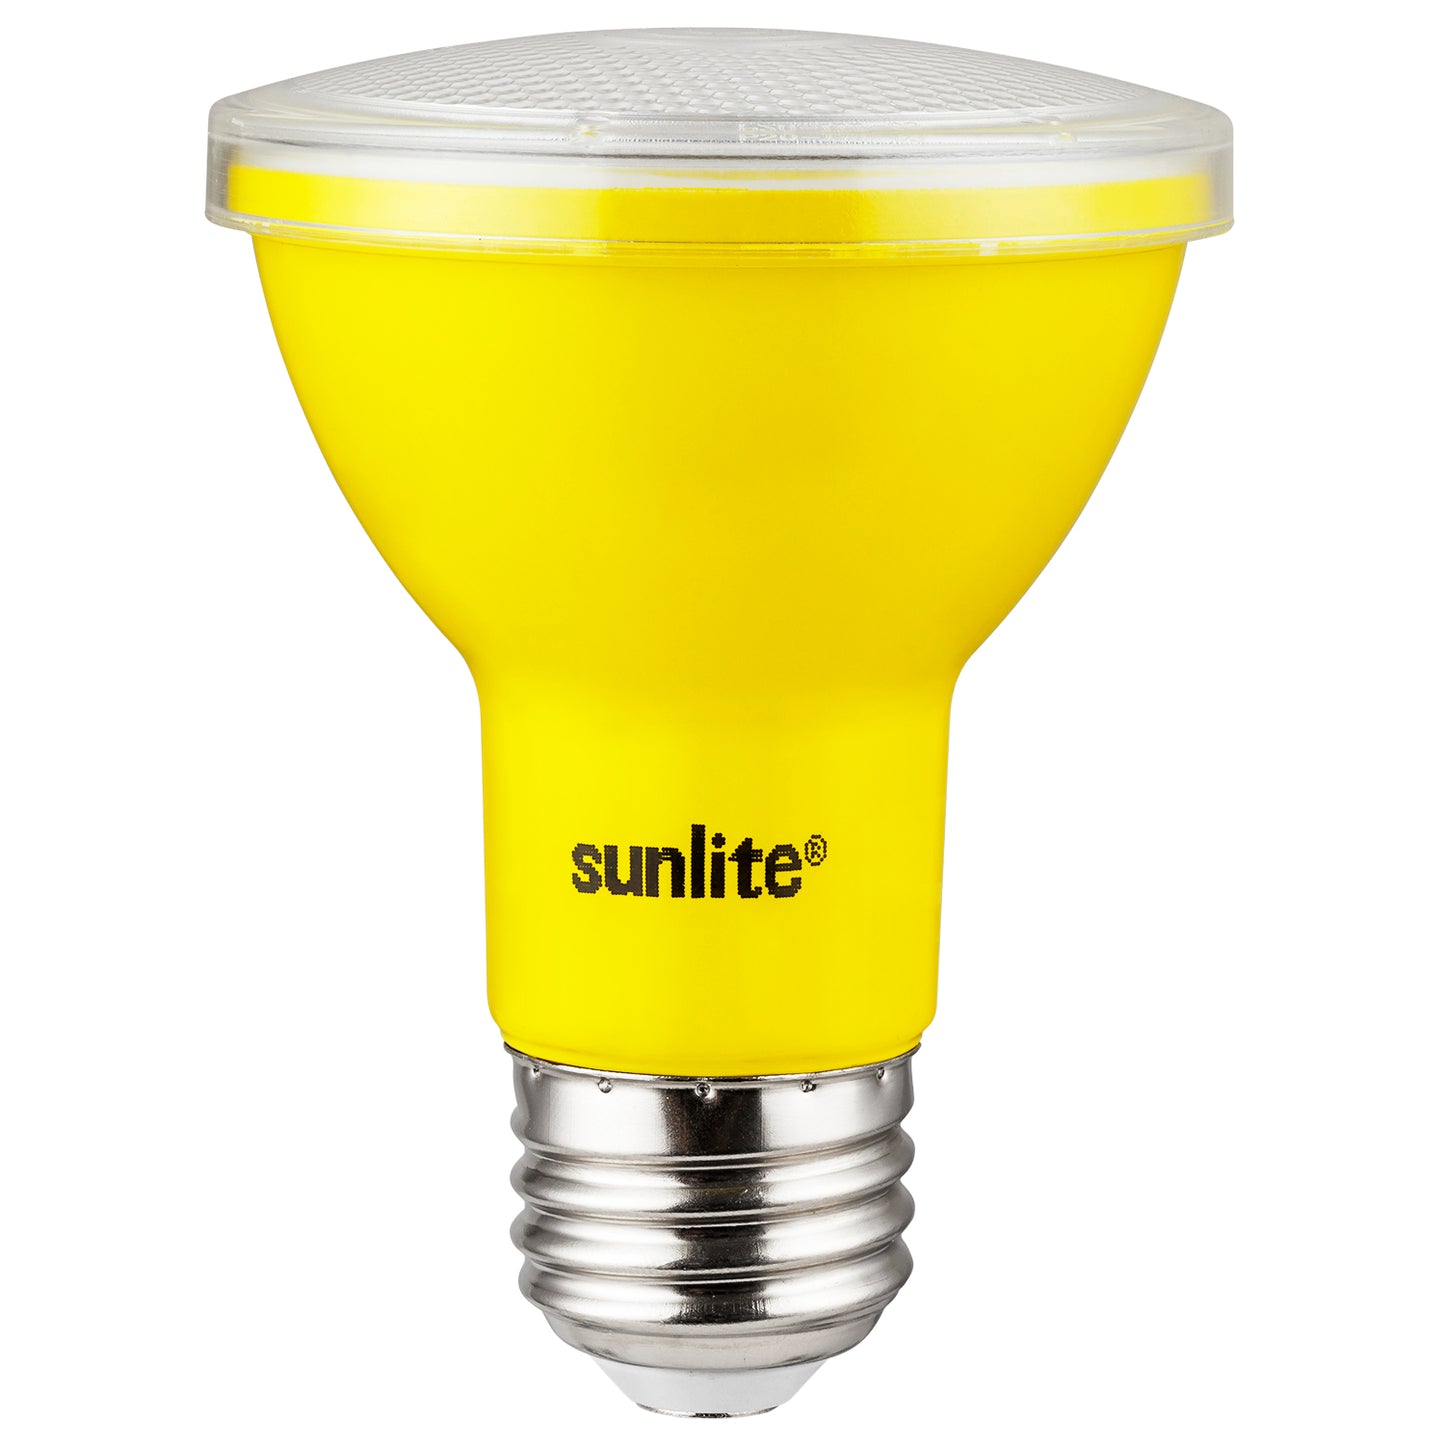 Sunlite 81466 LED PAR20 Colored Recessed Bug Light Bulb, 3 Watt (50w Equivalent), Medium (E26) Base, Floodlight, ETL Listed, Yellow, 1 pack